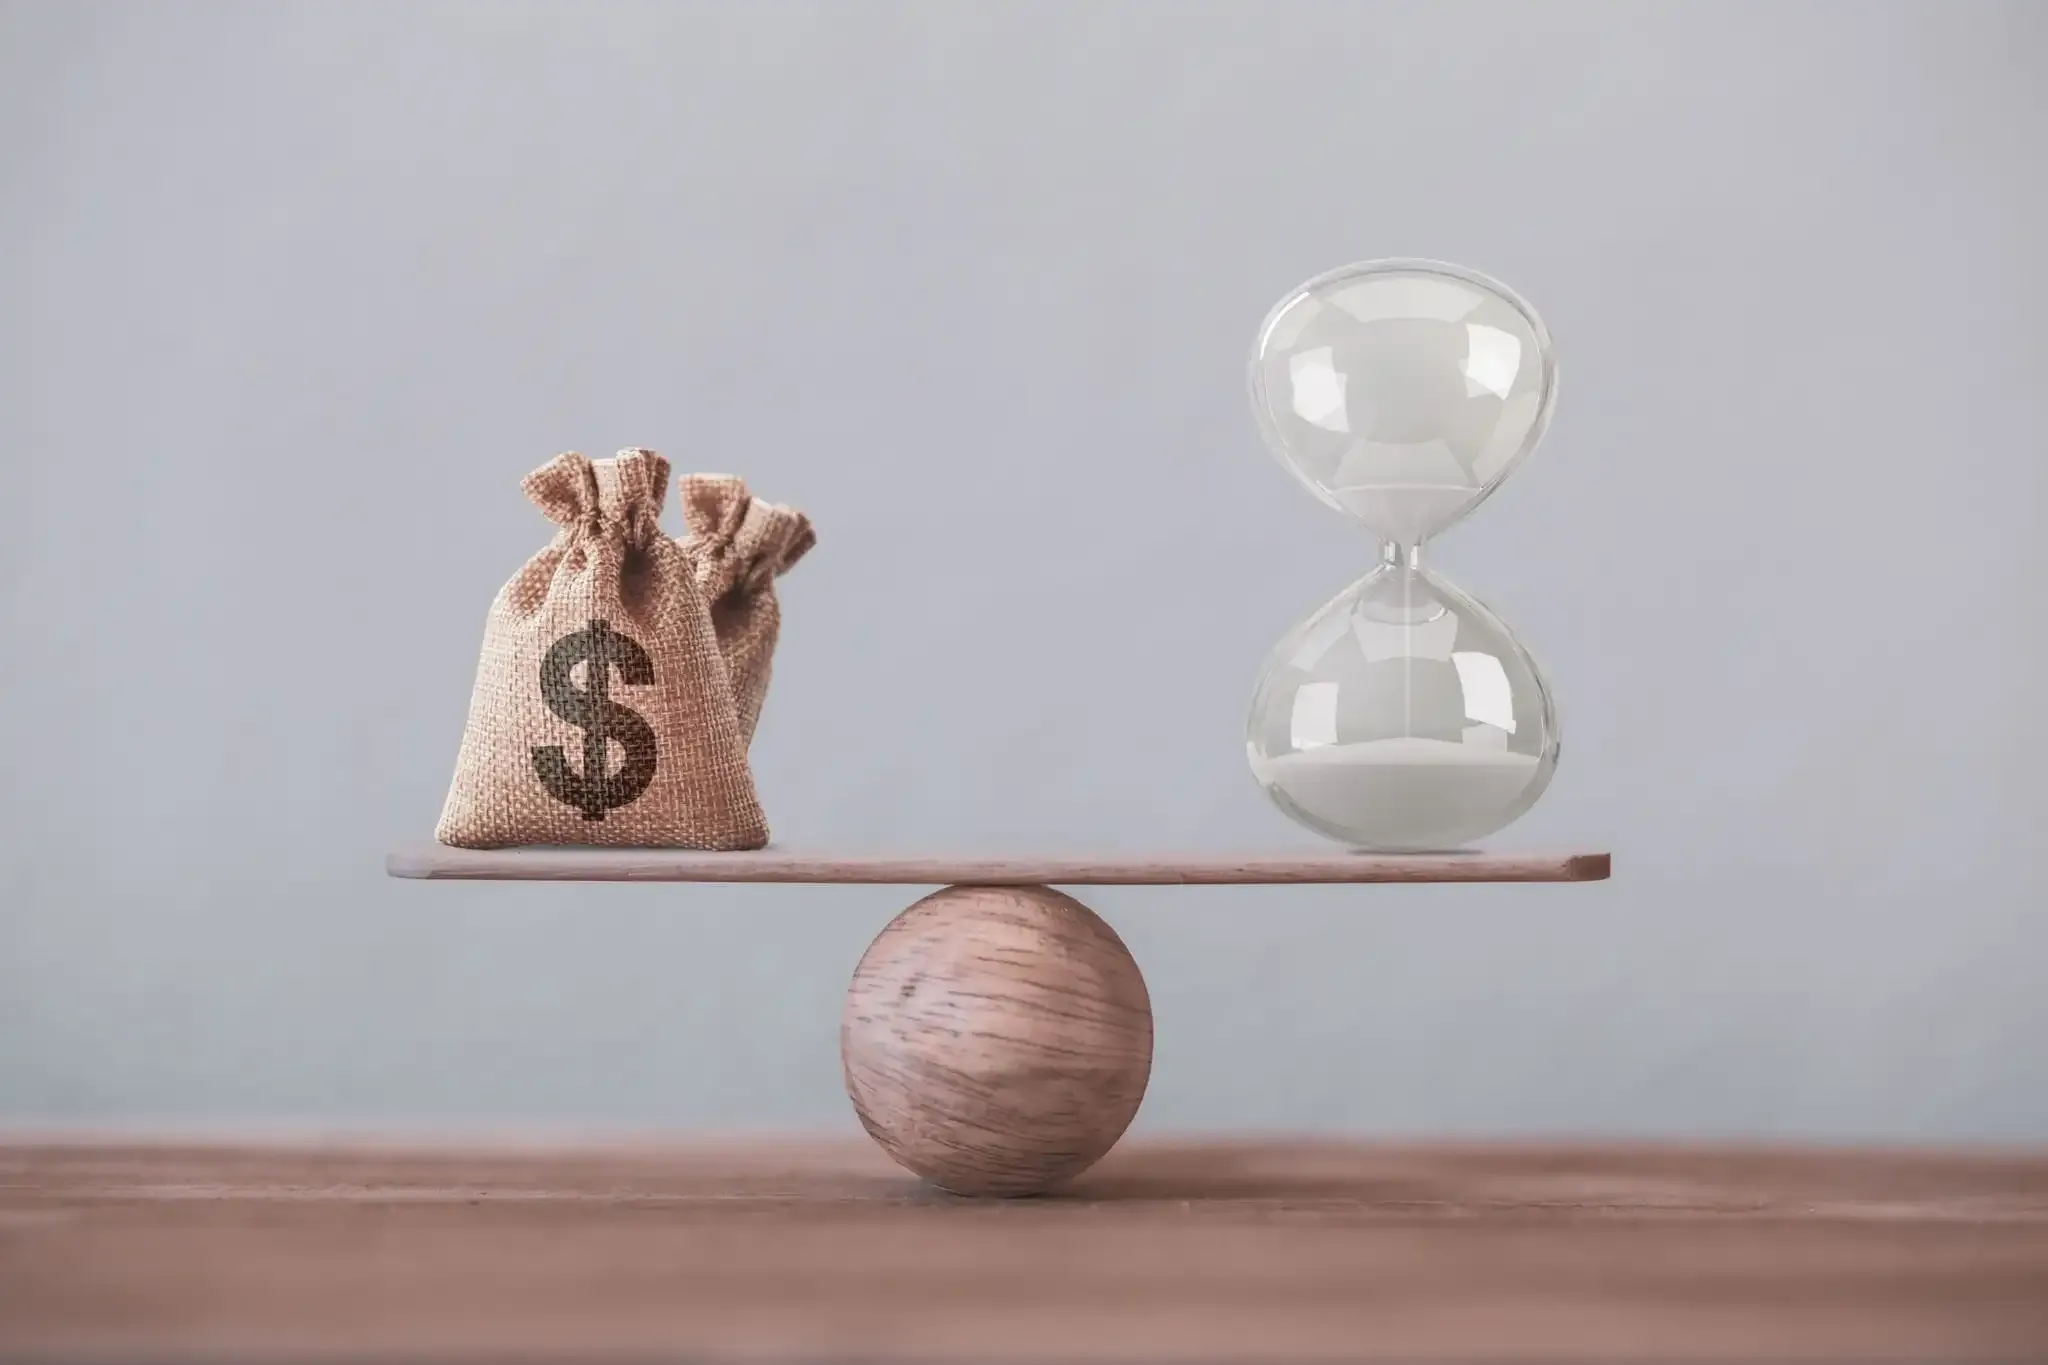 Money and time balancing